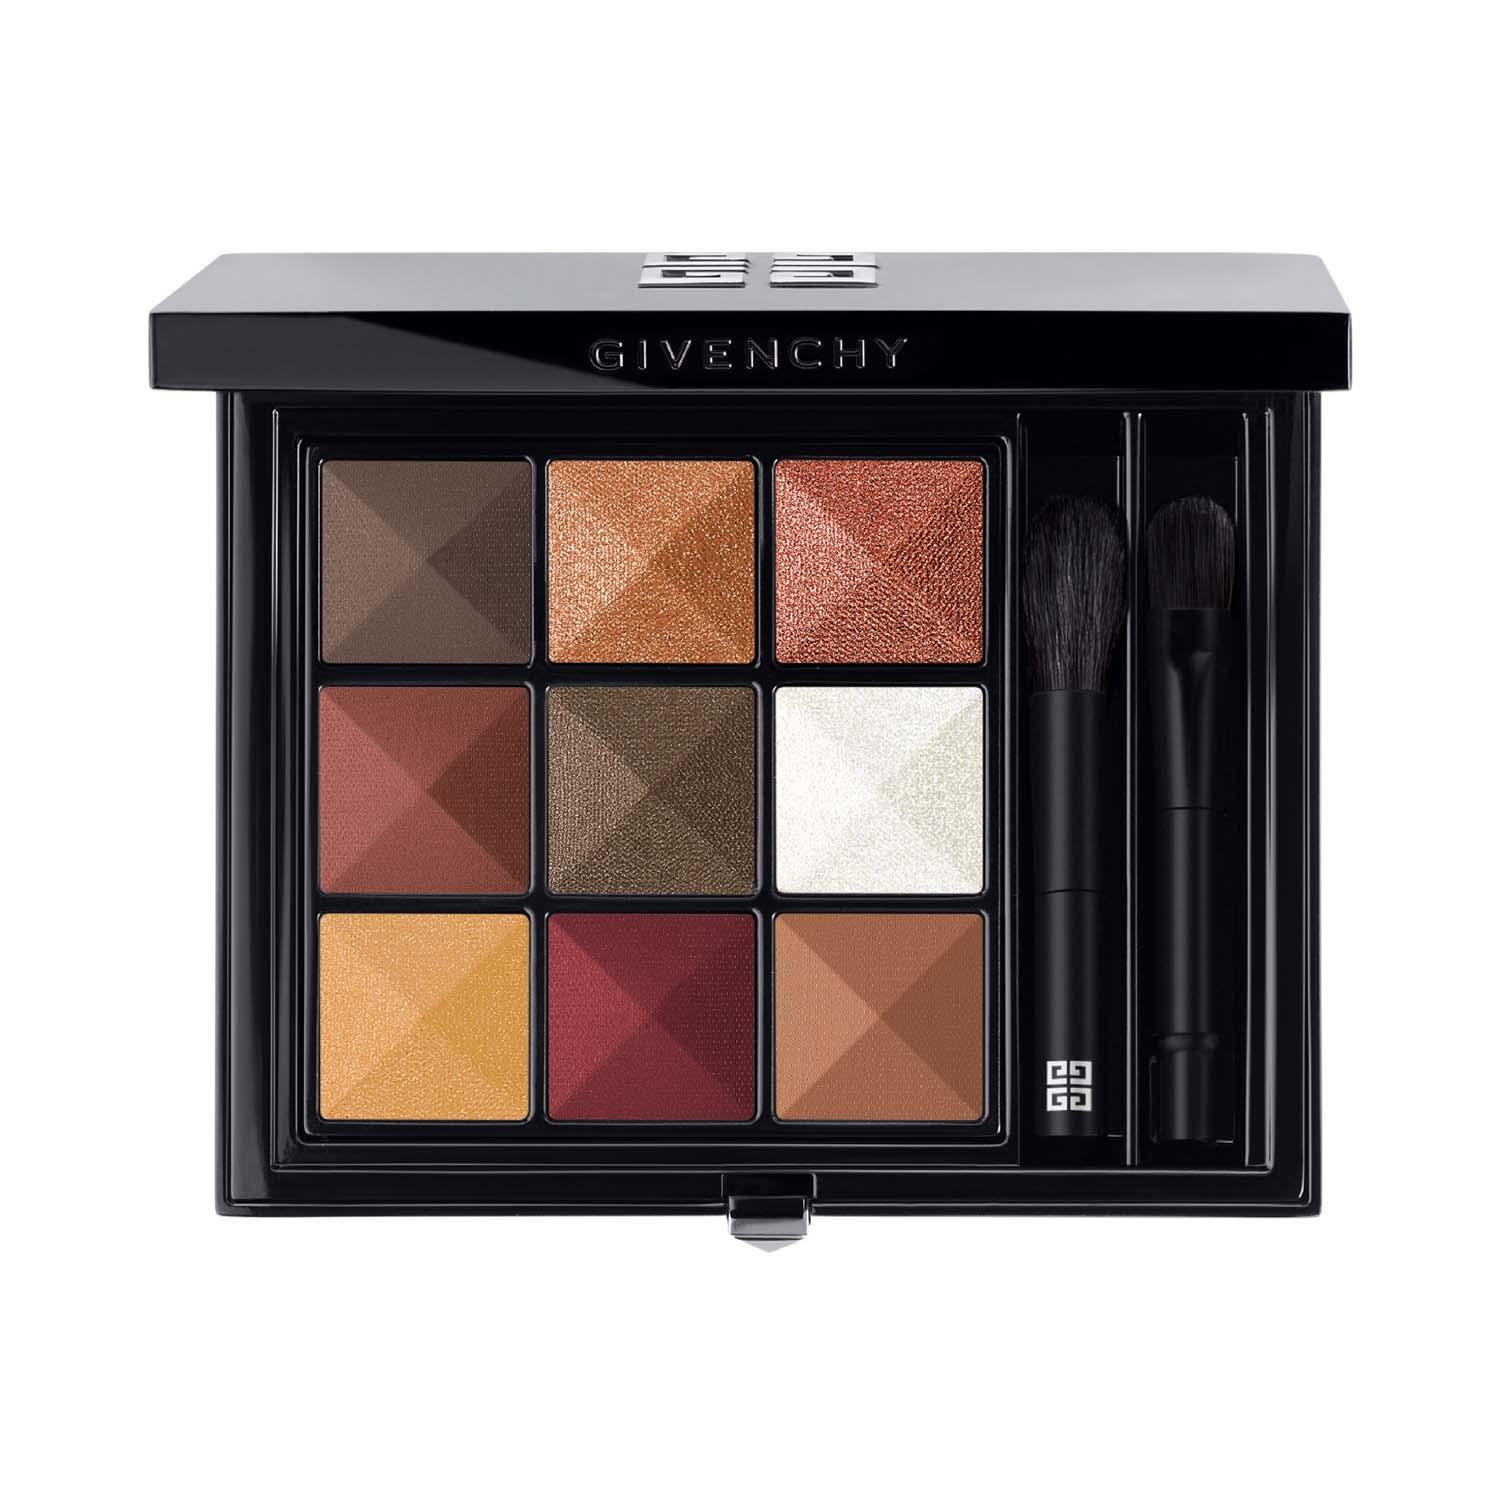 Givenchy | Givenchy Le 9 DG Eyeshadow Palette - N5 R1 (8g)